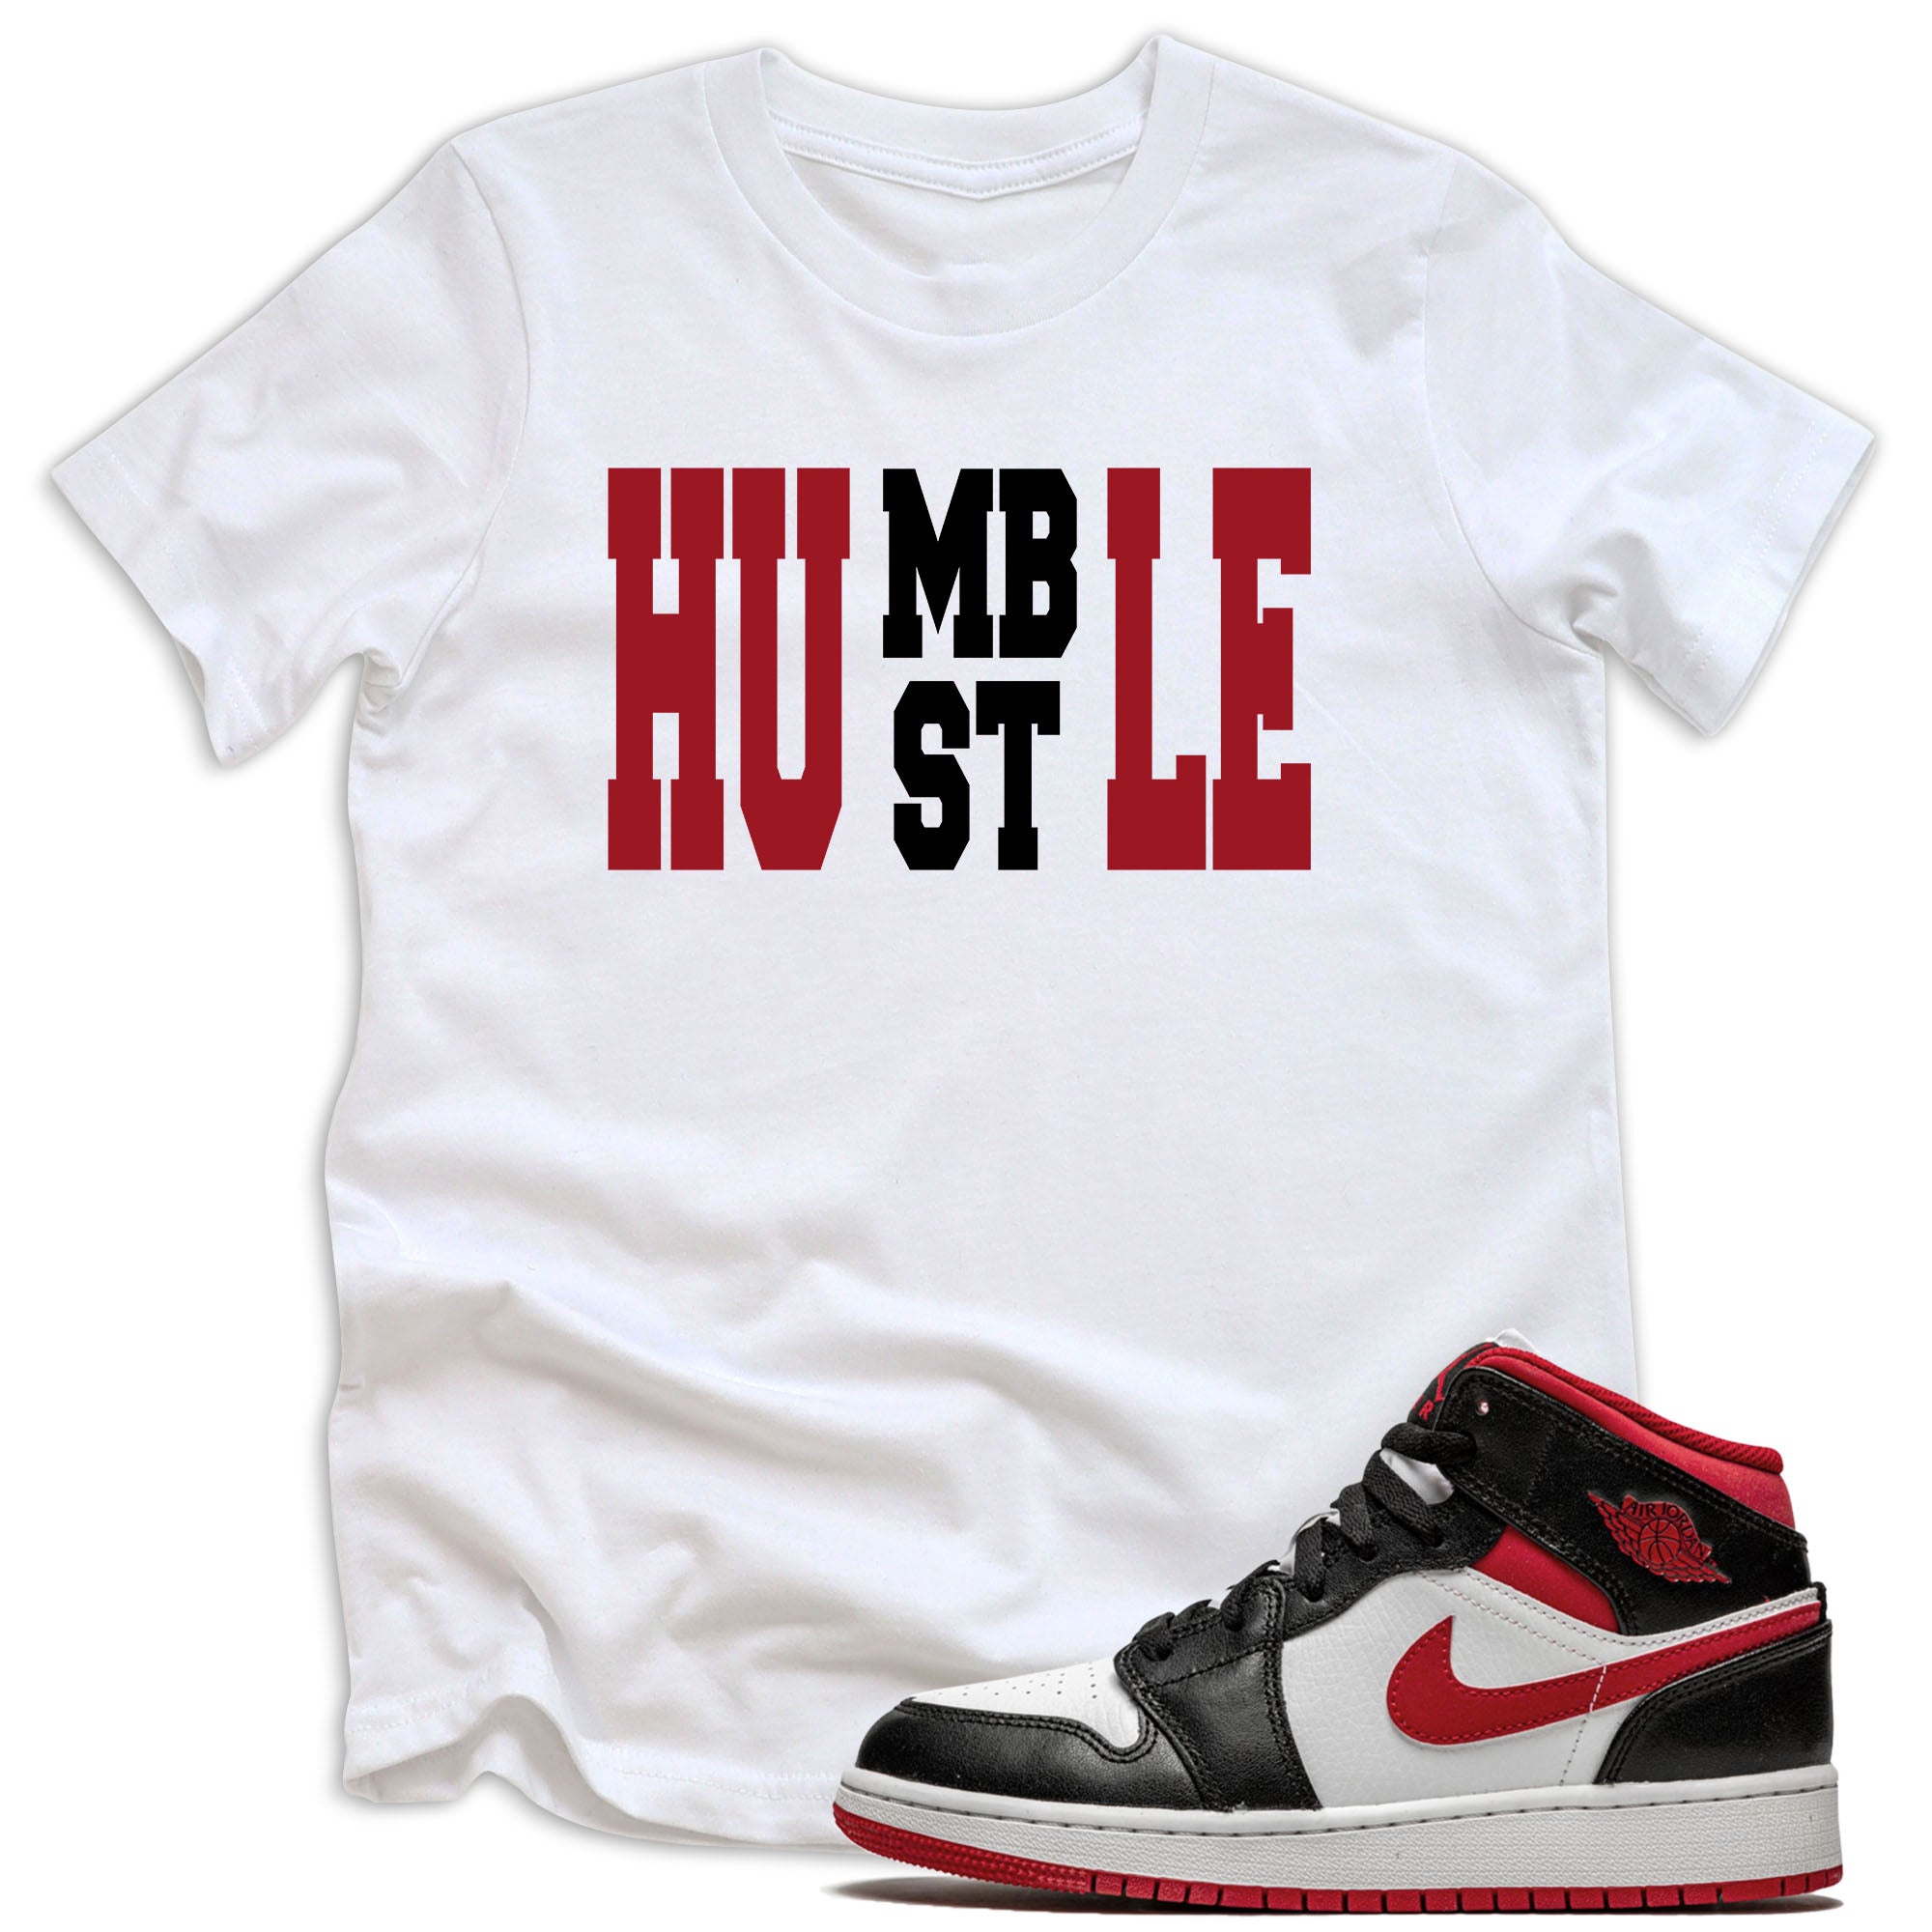 Humble Hustle Shirt Air Jordan 1 Mid Gym Red Black White photo